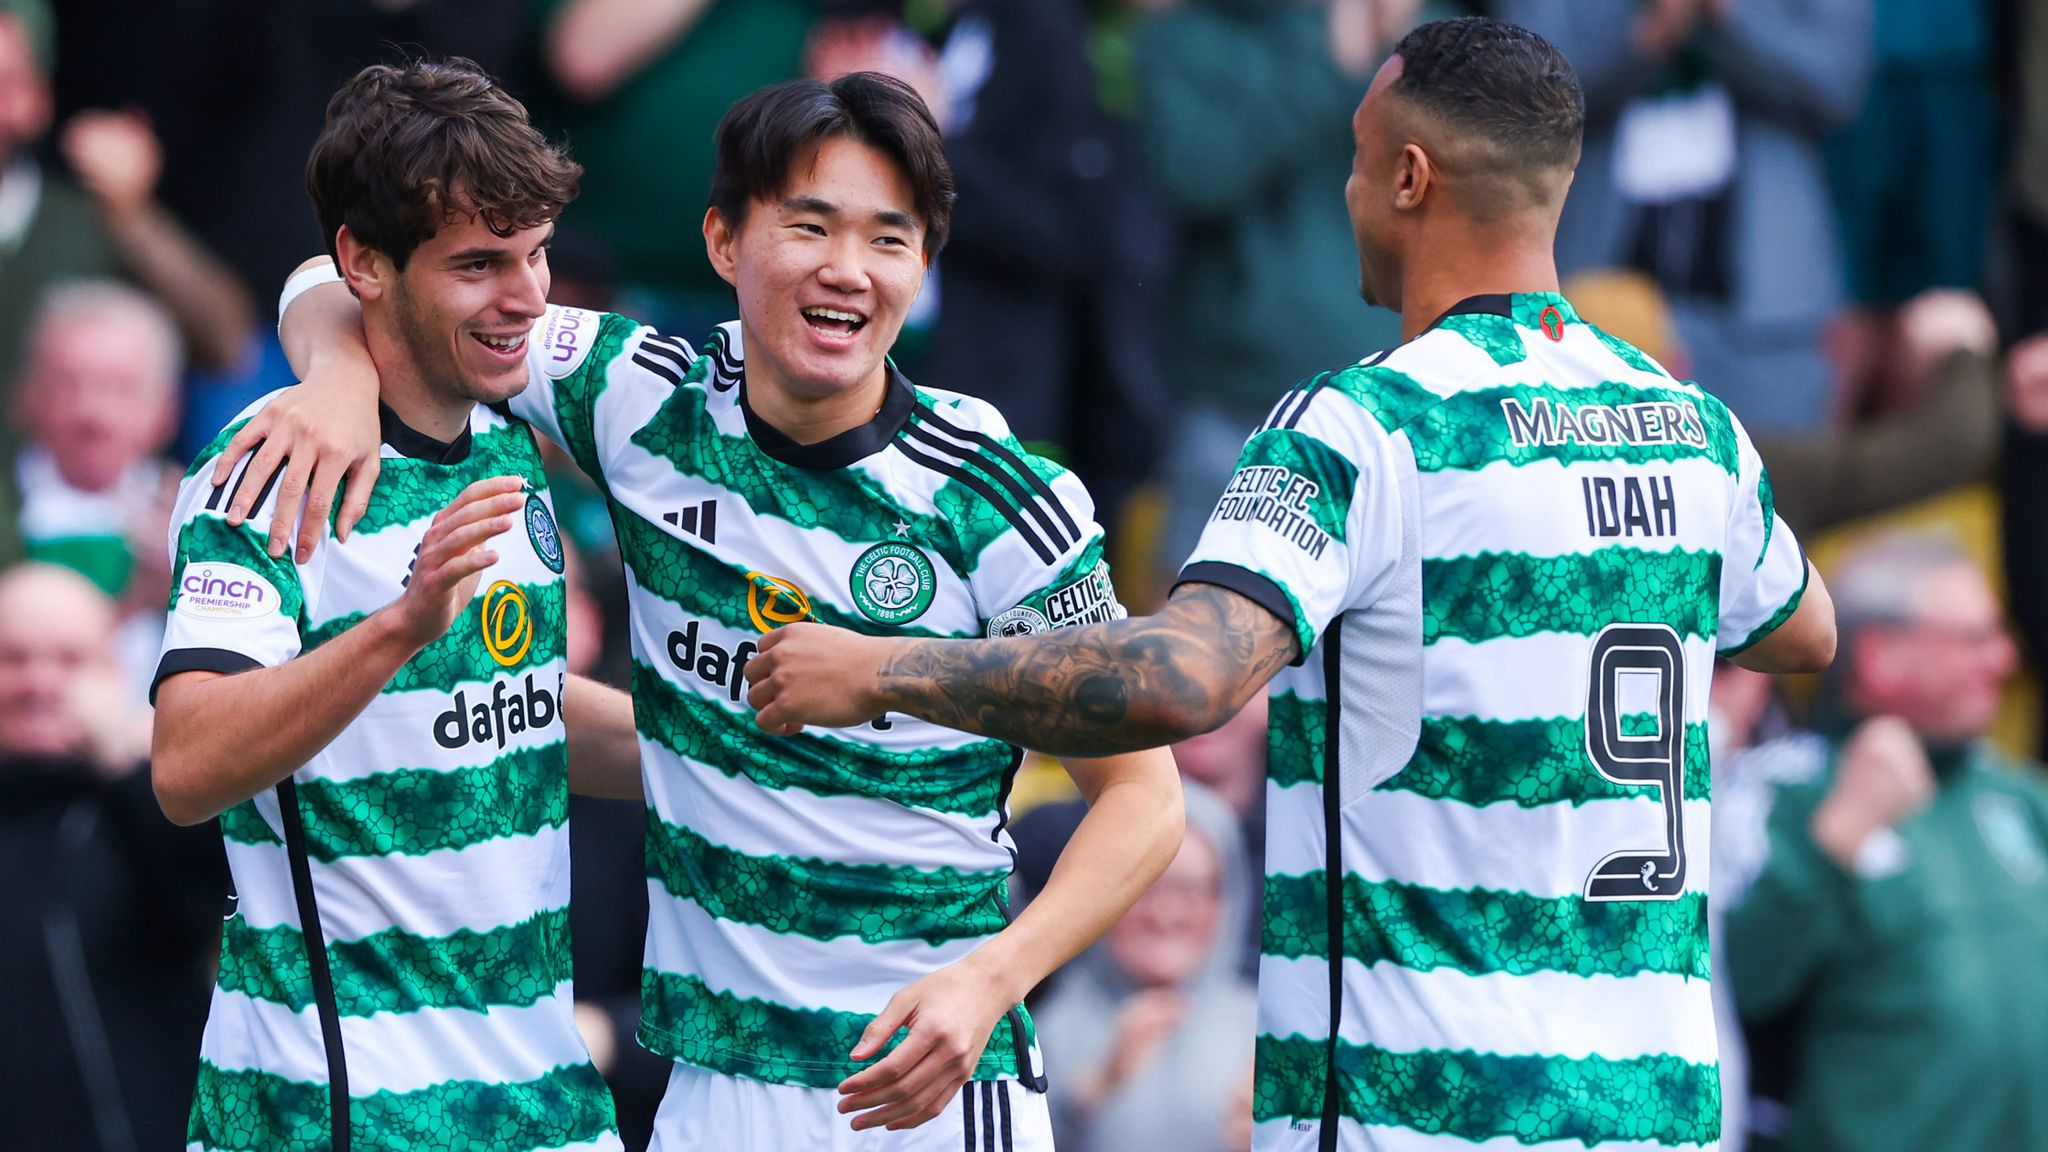 Livingston 0 - 3 Celtic - Match Report & Highlights